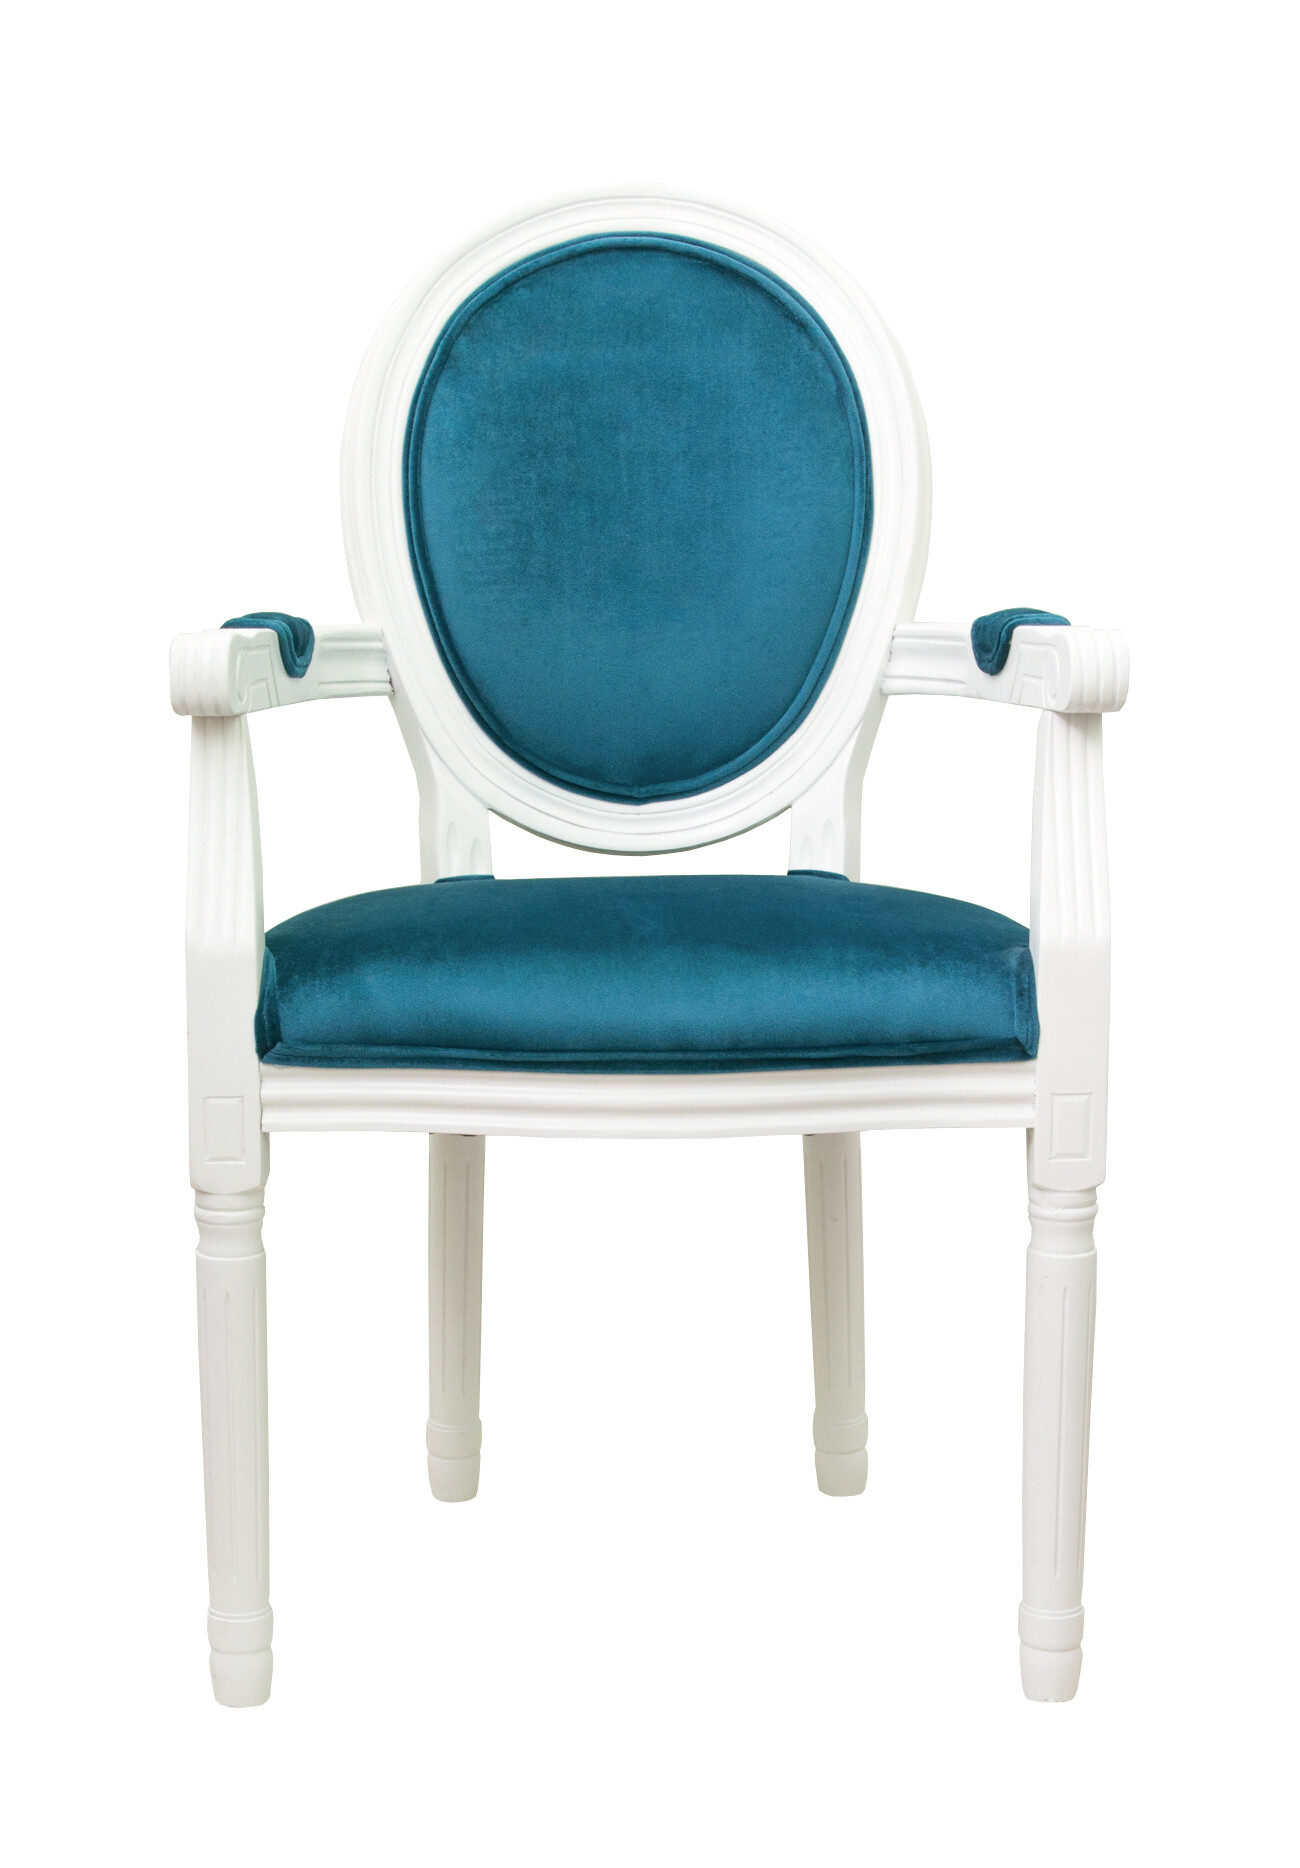 Стул с мягким сиденьем 55х55 см бело-голубой Volker Arm Blue&White